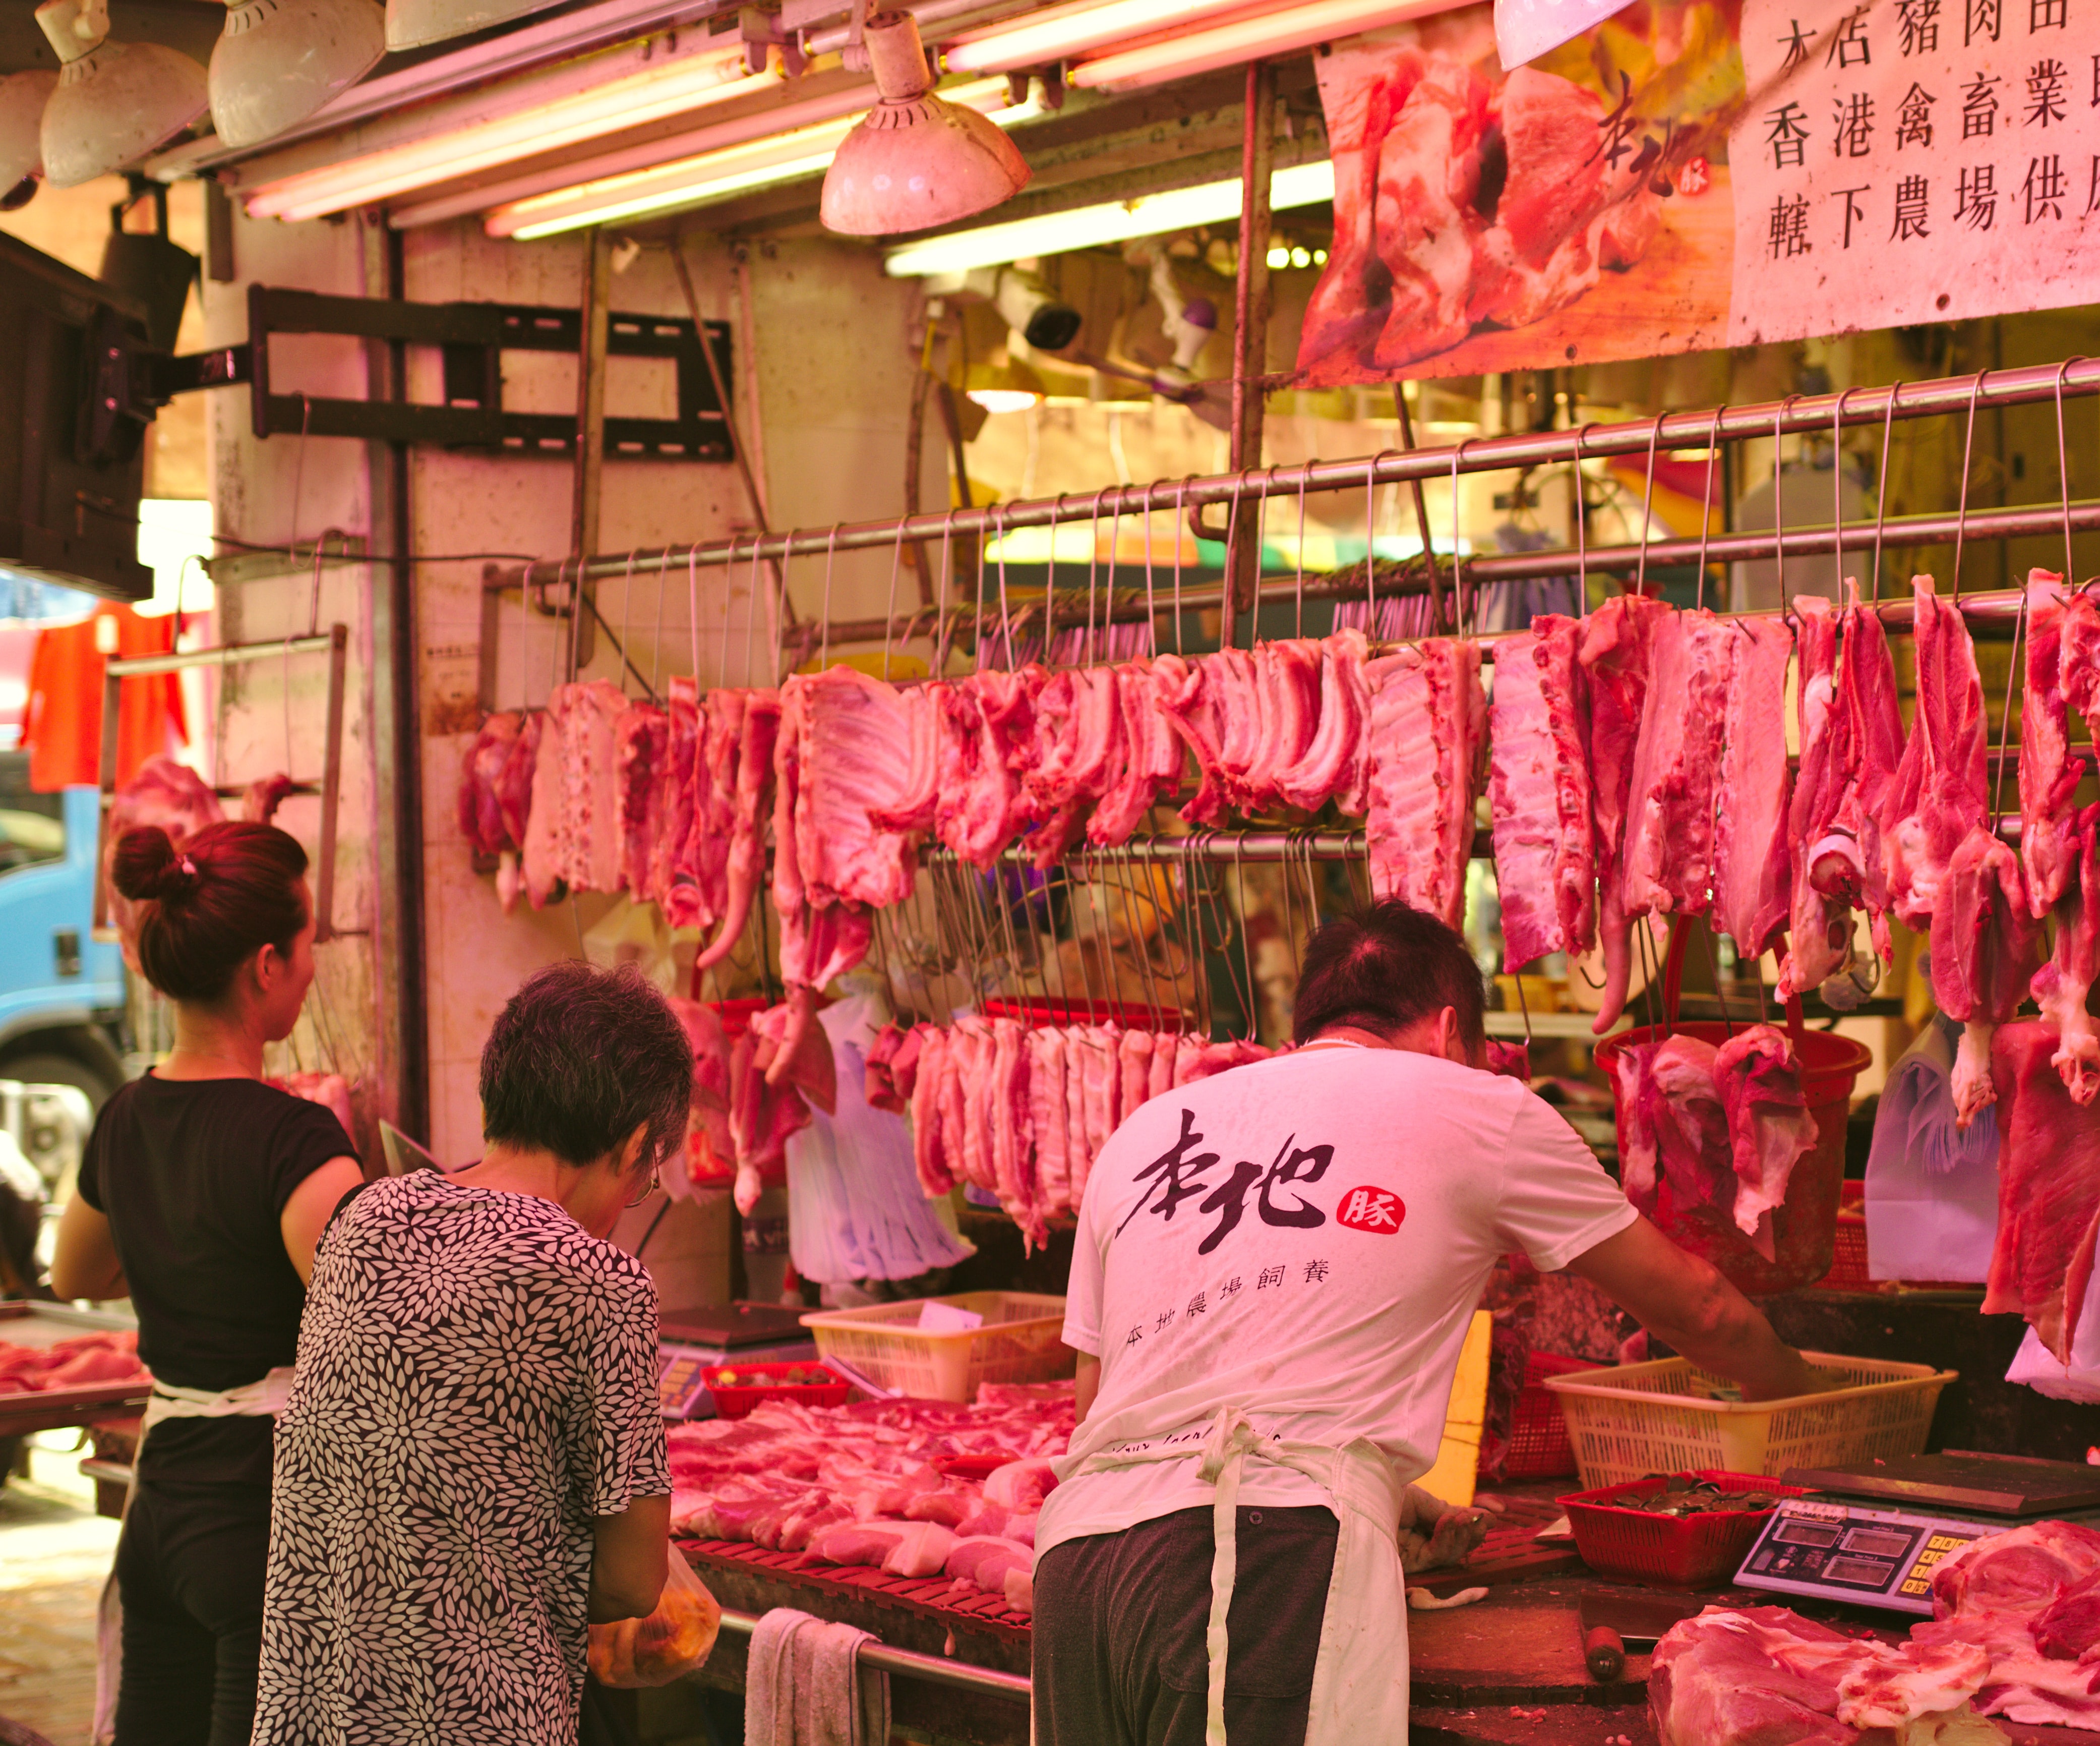 Coronavirus Curbs International Meat Shipments, but Chinese Import Surge Will Resume